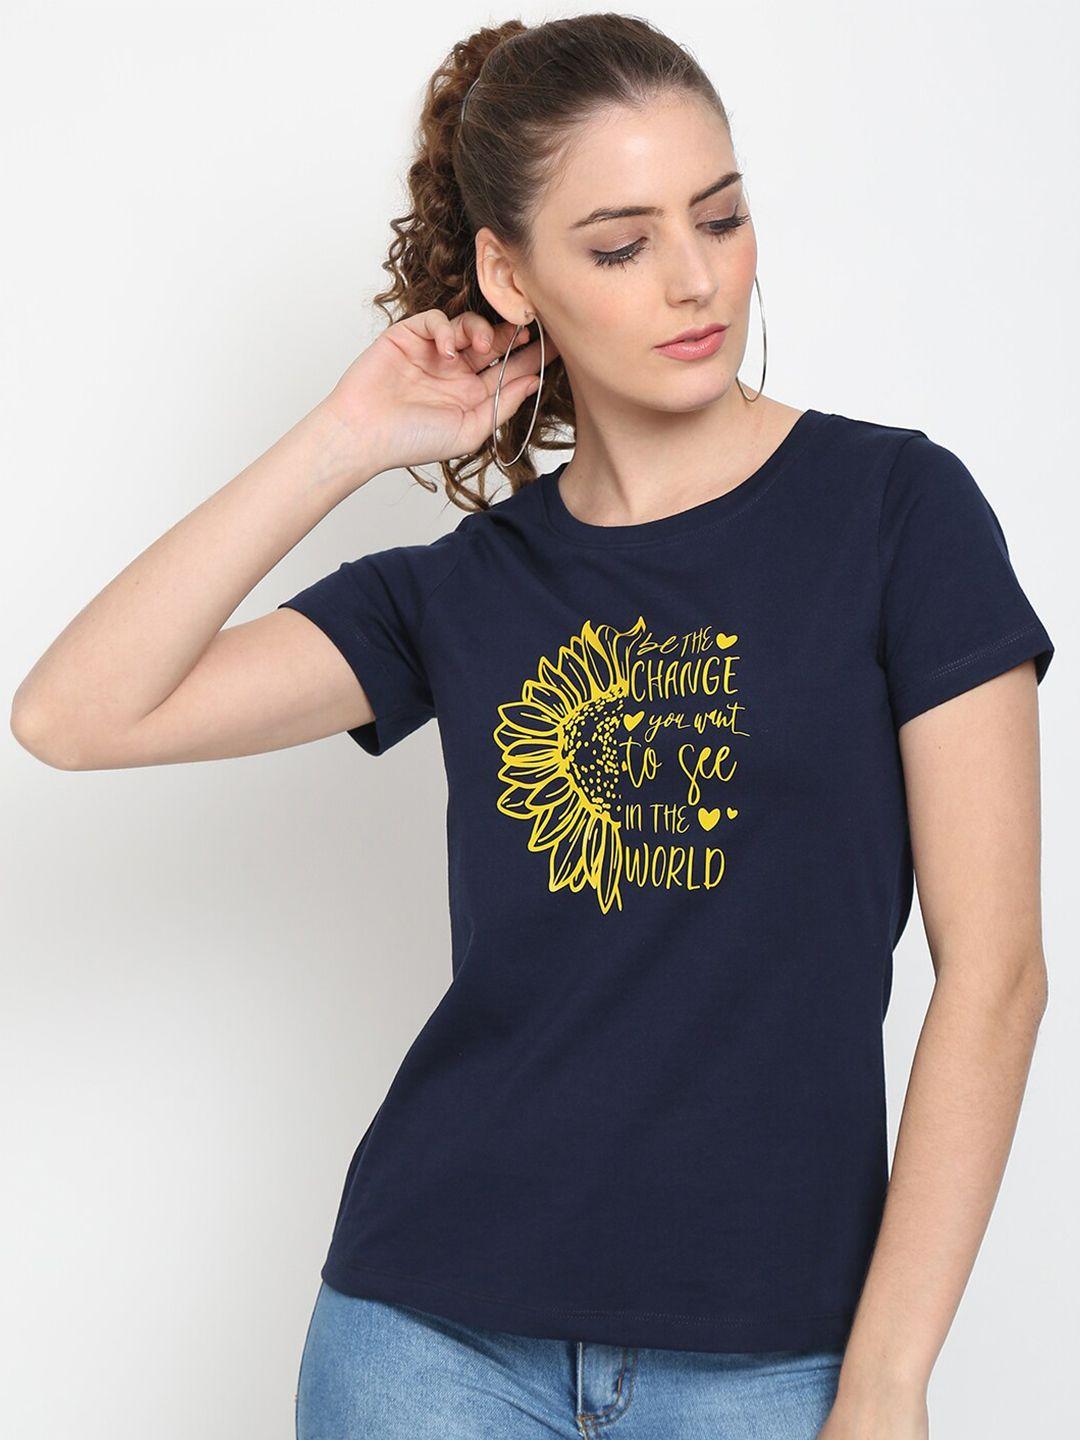 unaone women navy blue printed slim fit cotton t-shirt